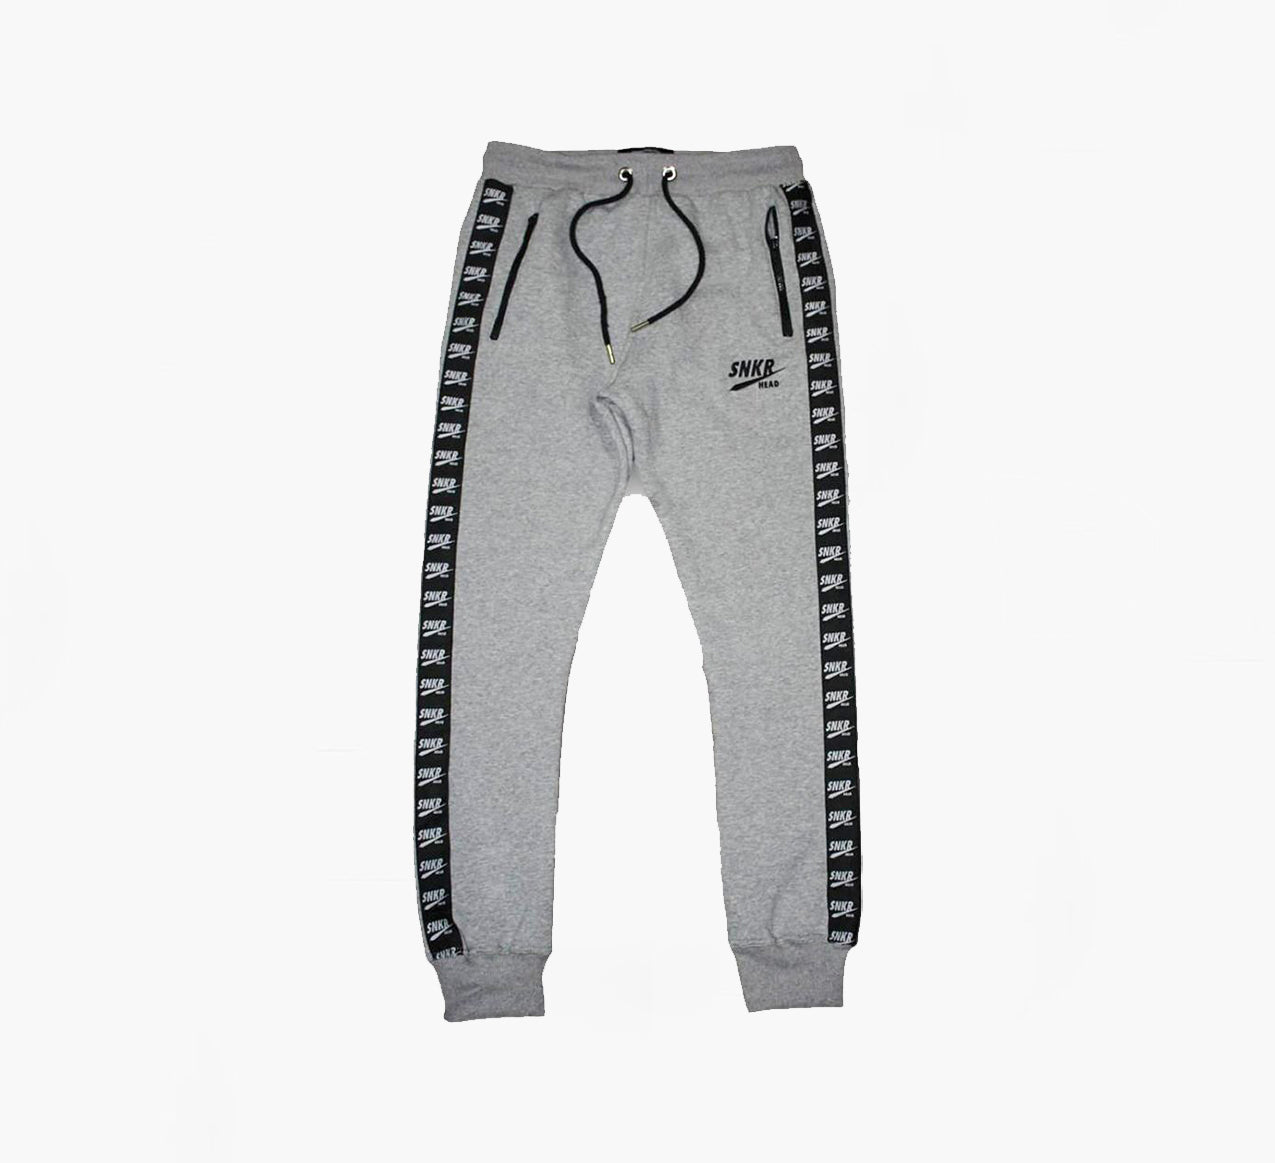 SNKR HEAD Jogger Logo Taped Grey Pants